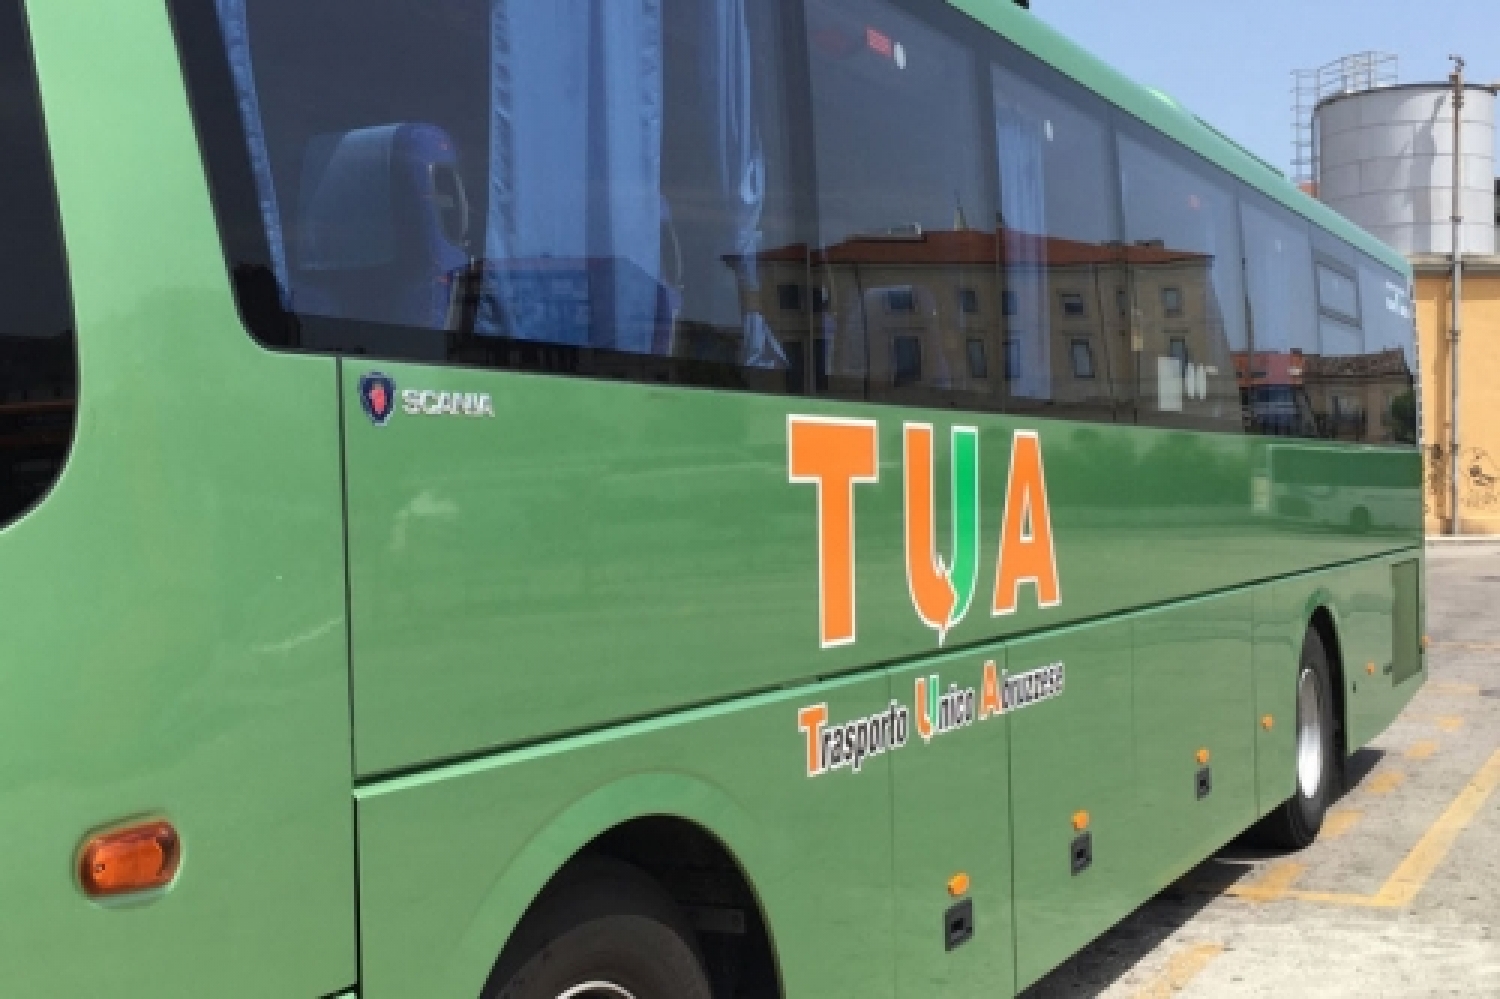 Tua-autobus-Abruzzo-Notizie-4.jpg